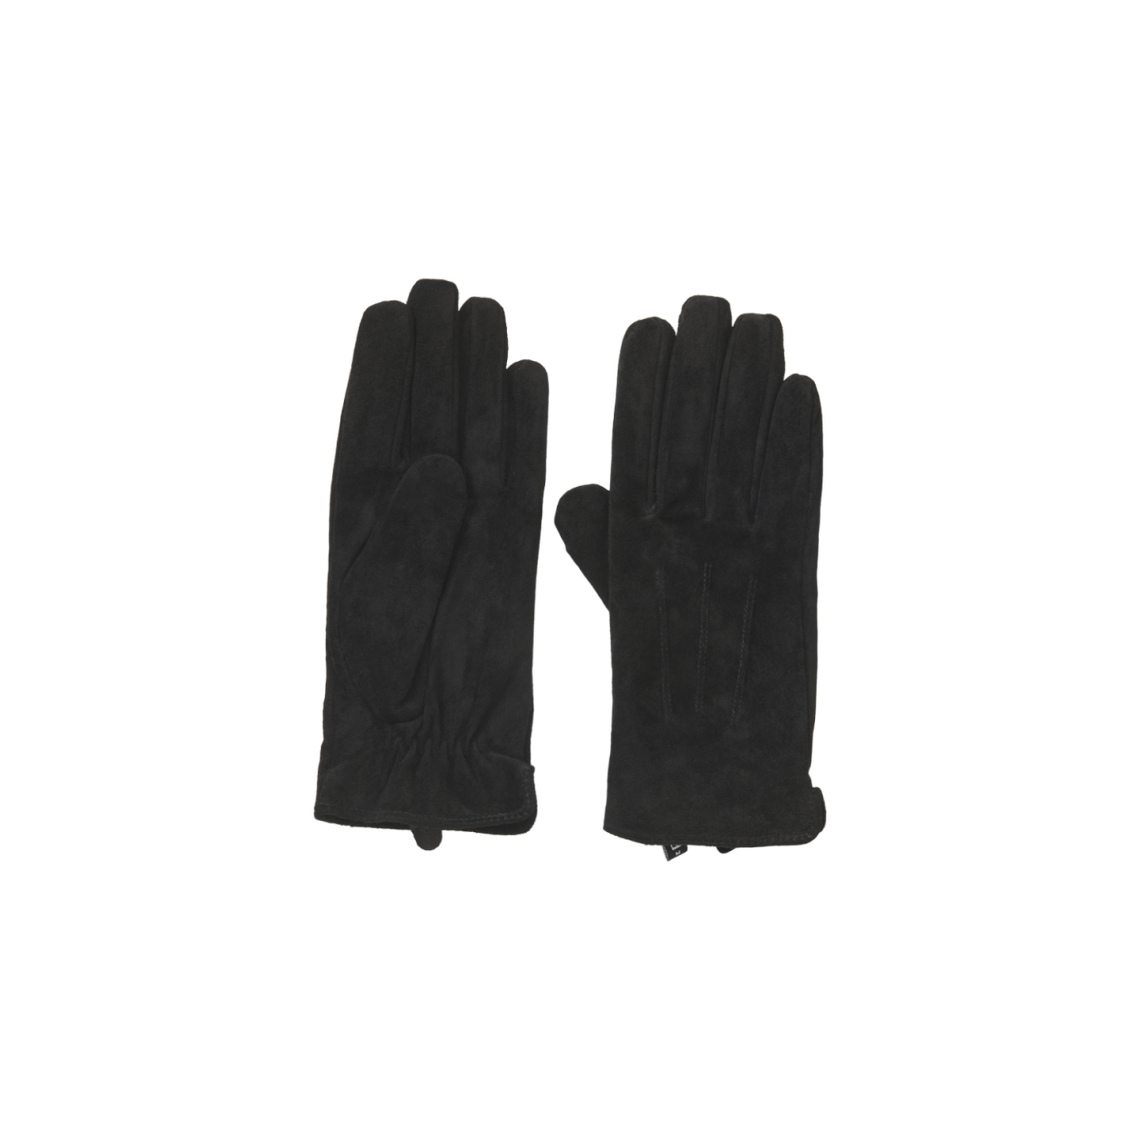 gants noir